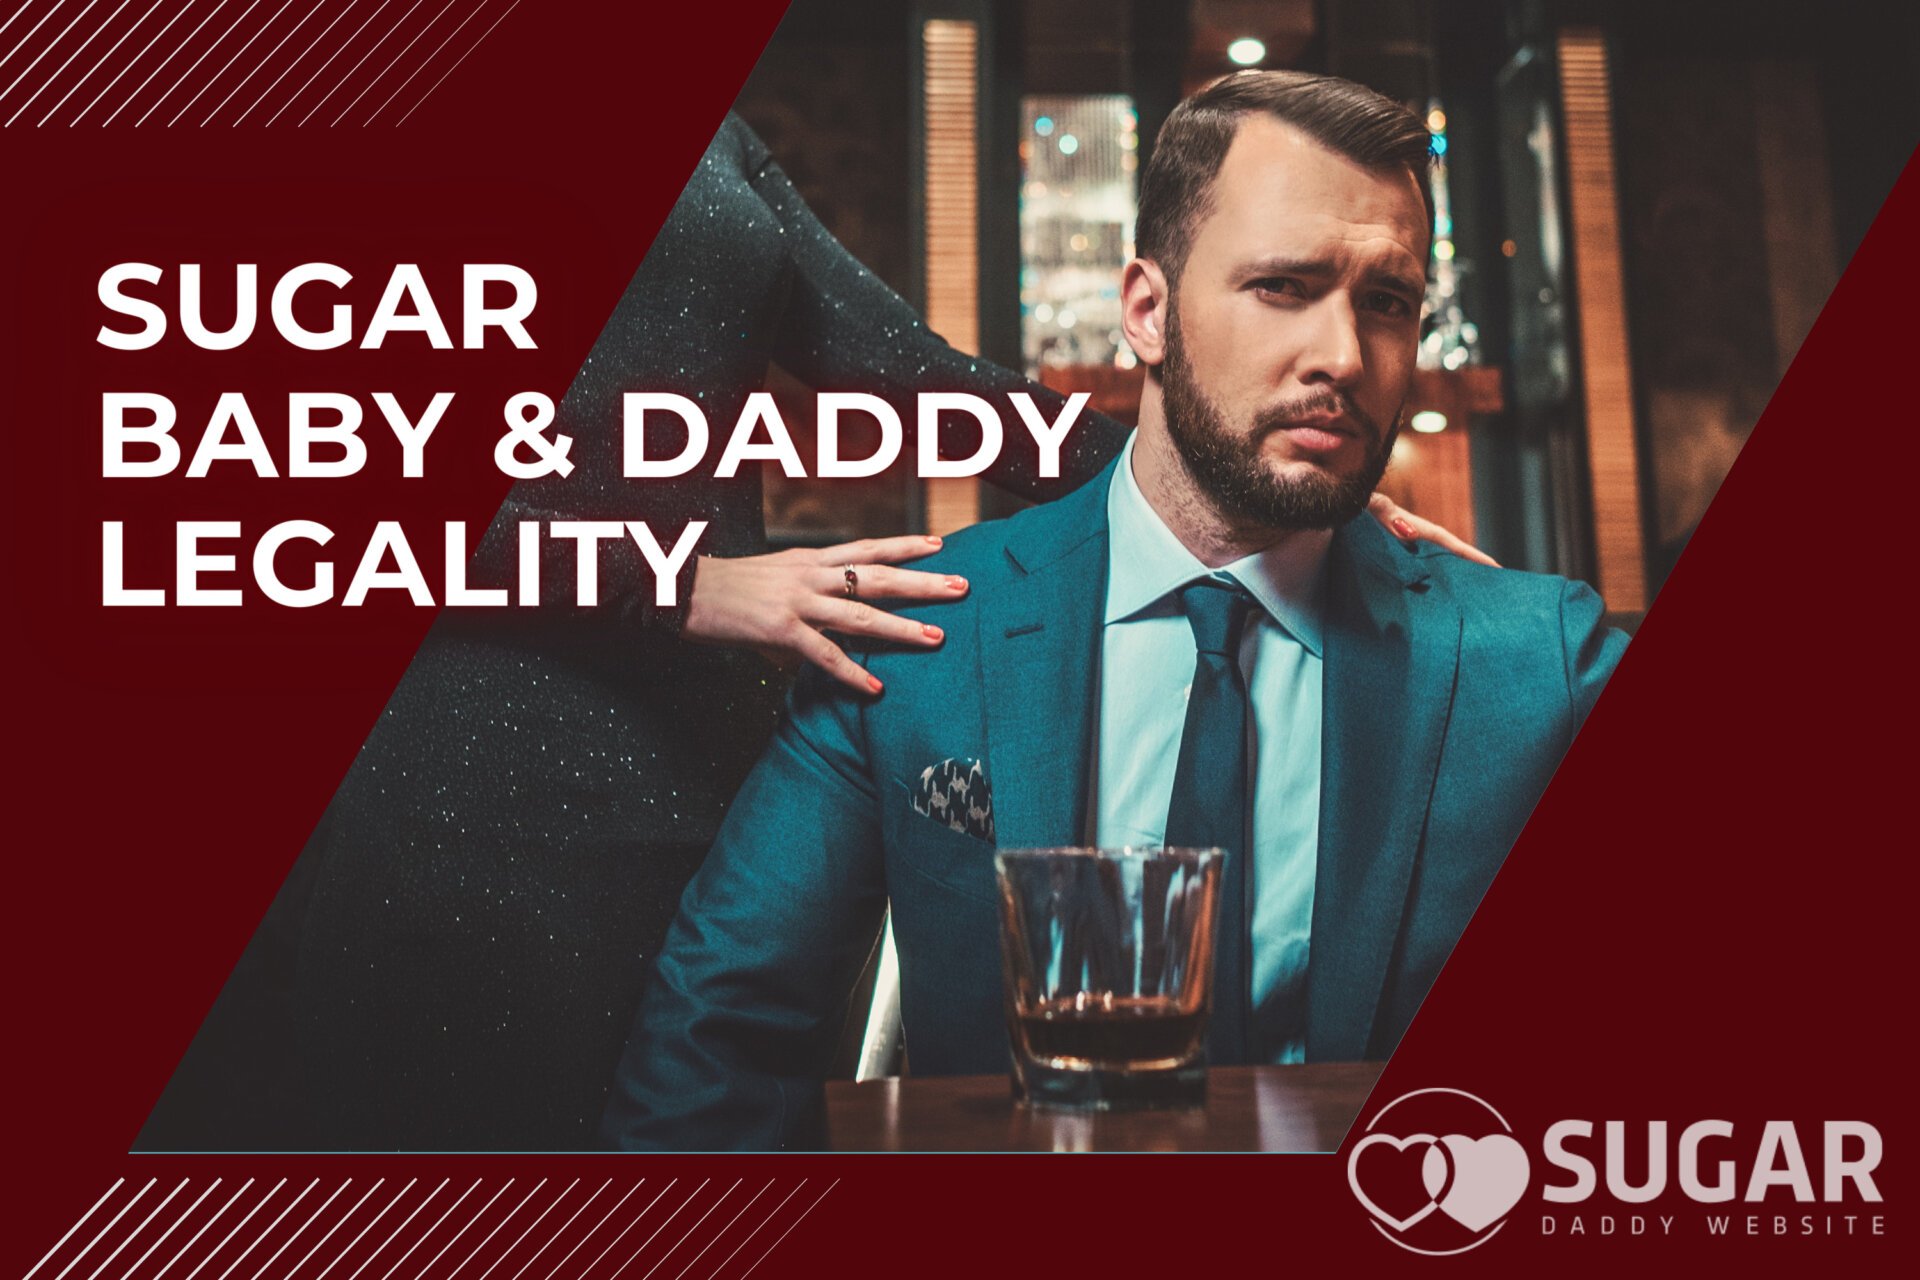 Sugar Baby & Daddy Legality - Is Being a Sugar Baby Illegal?